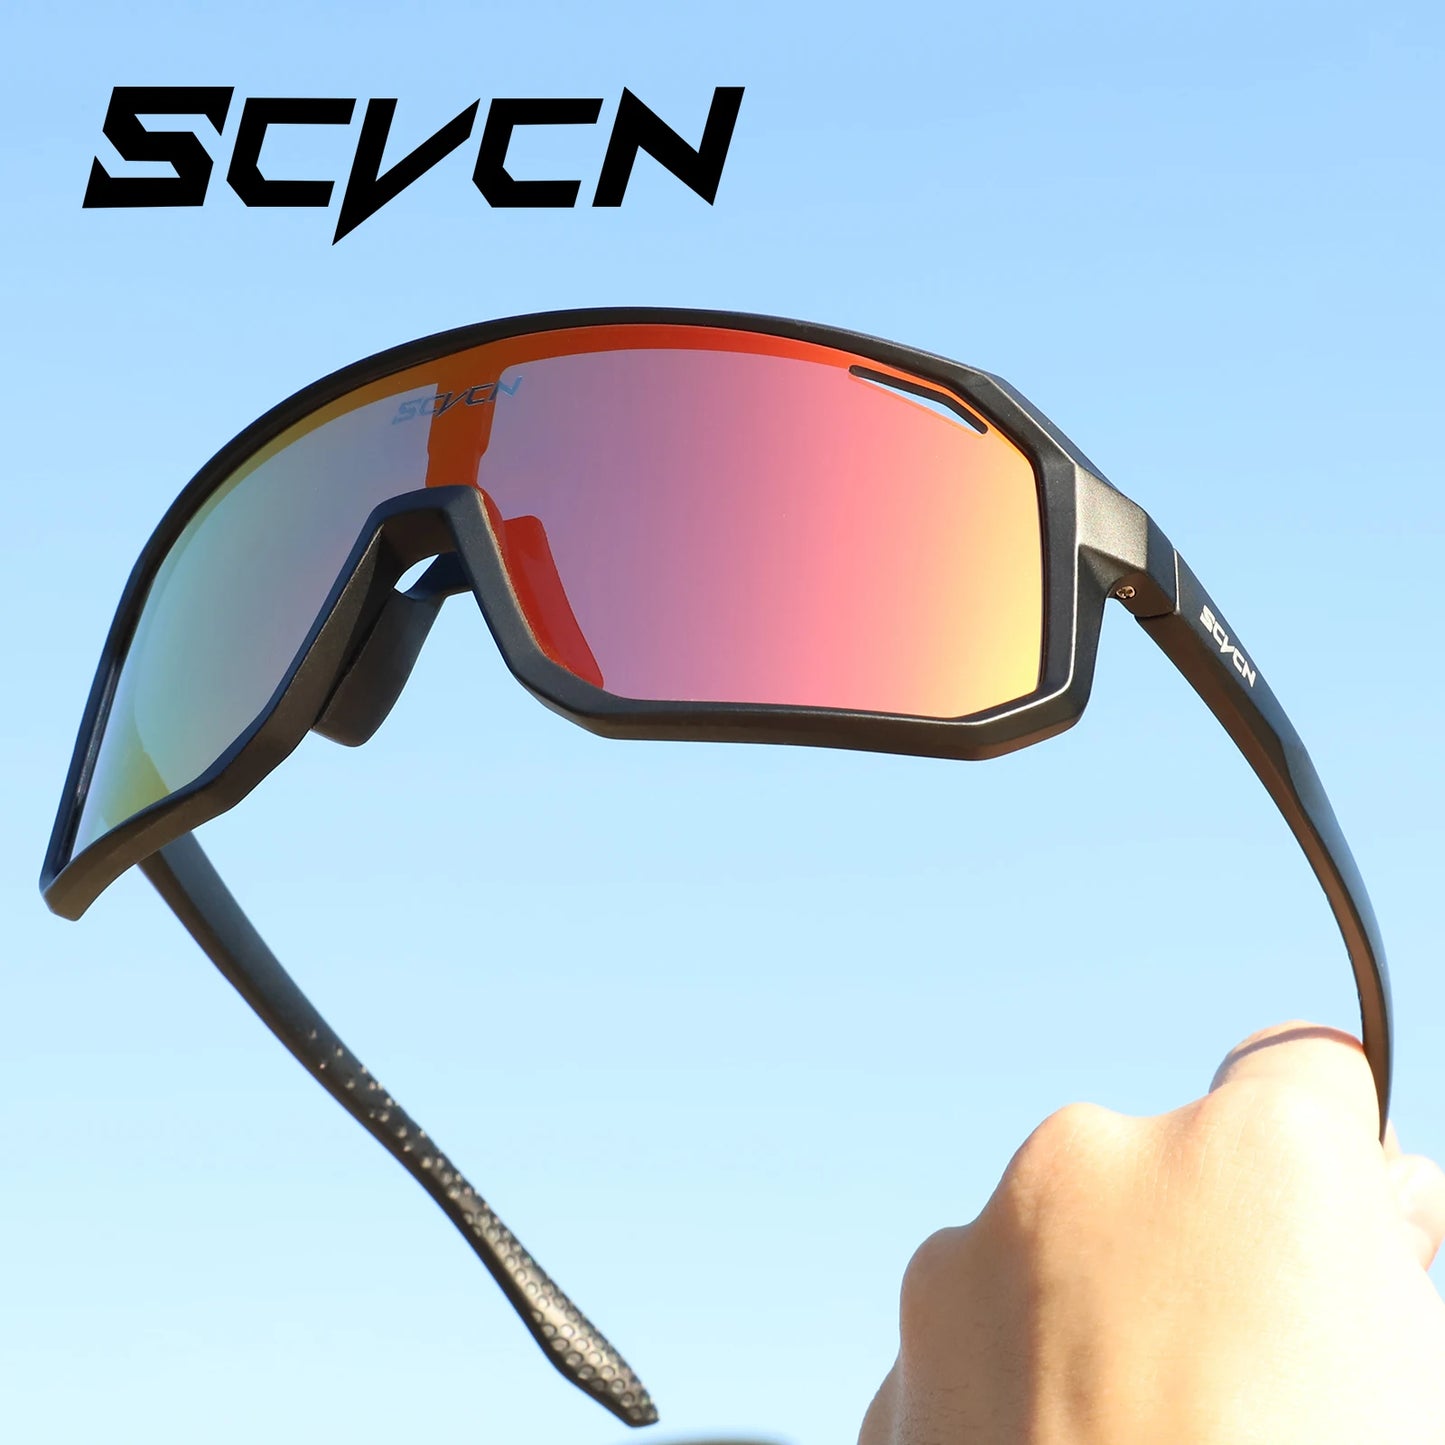 Extreme sport, SCVCN polarized sunglasses